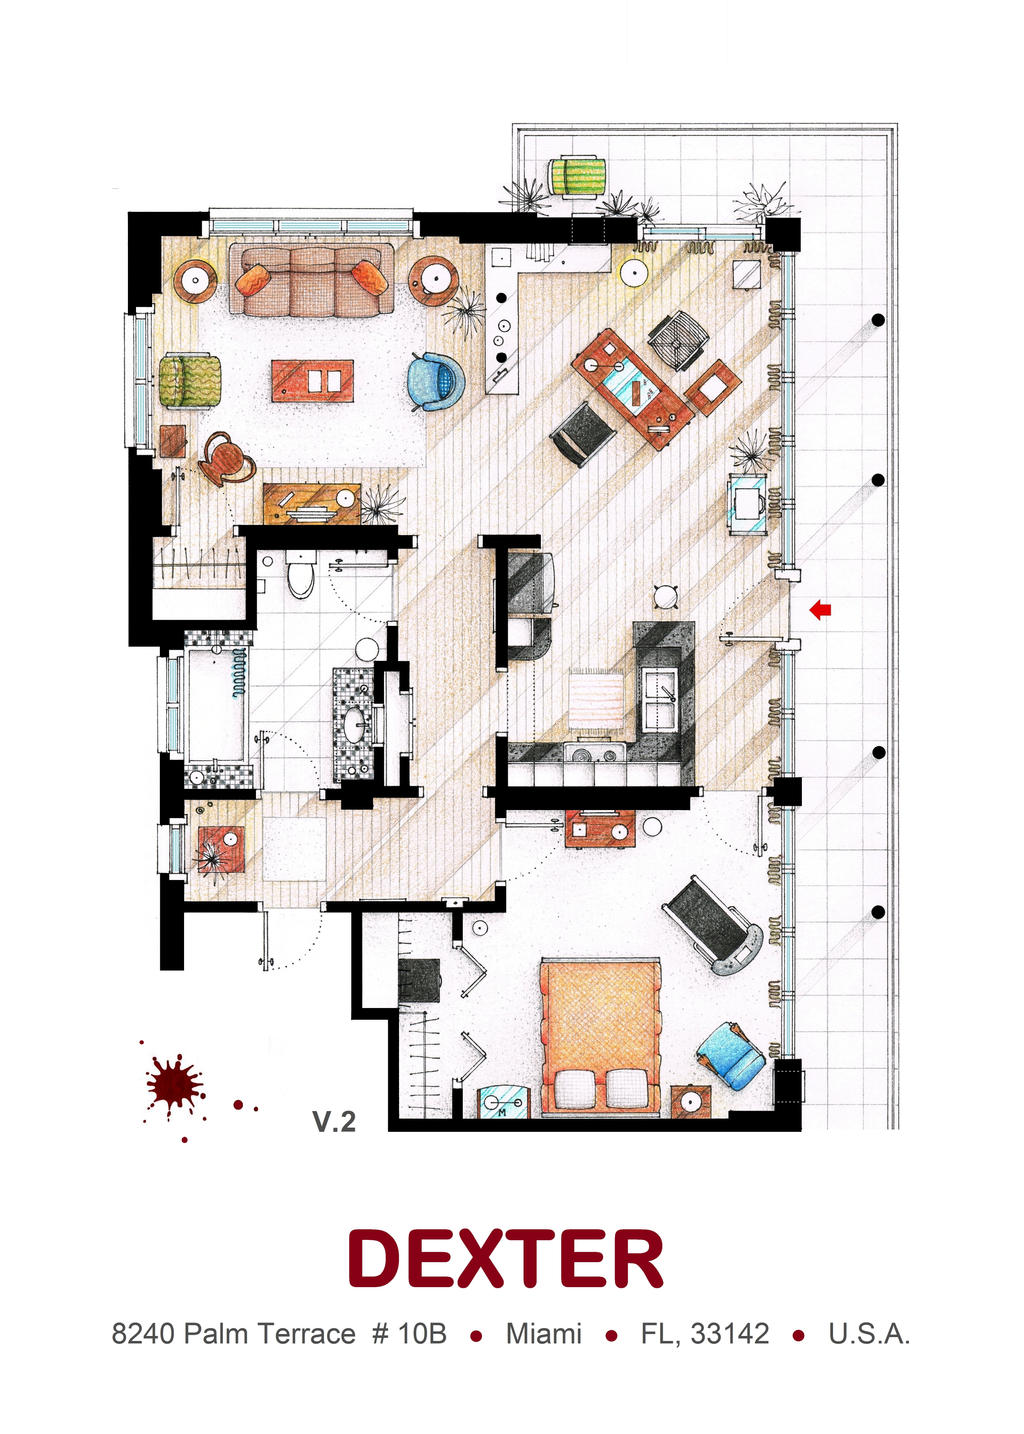 Floorplan of Dexter Morgan's Apartment v.2